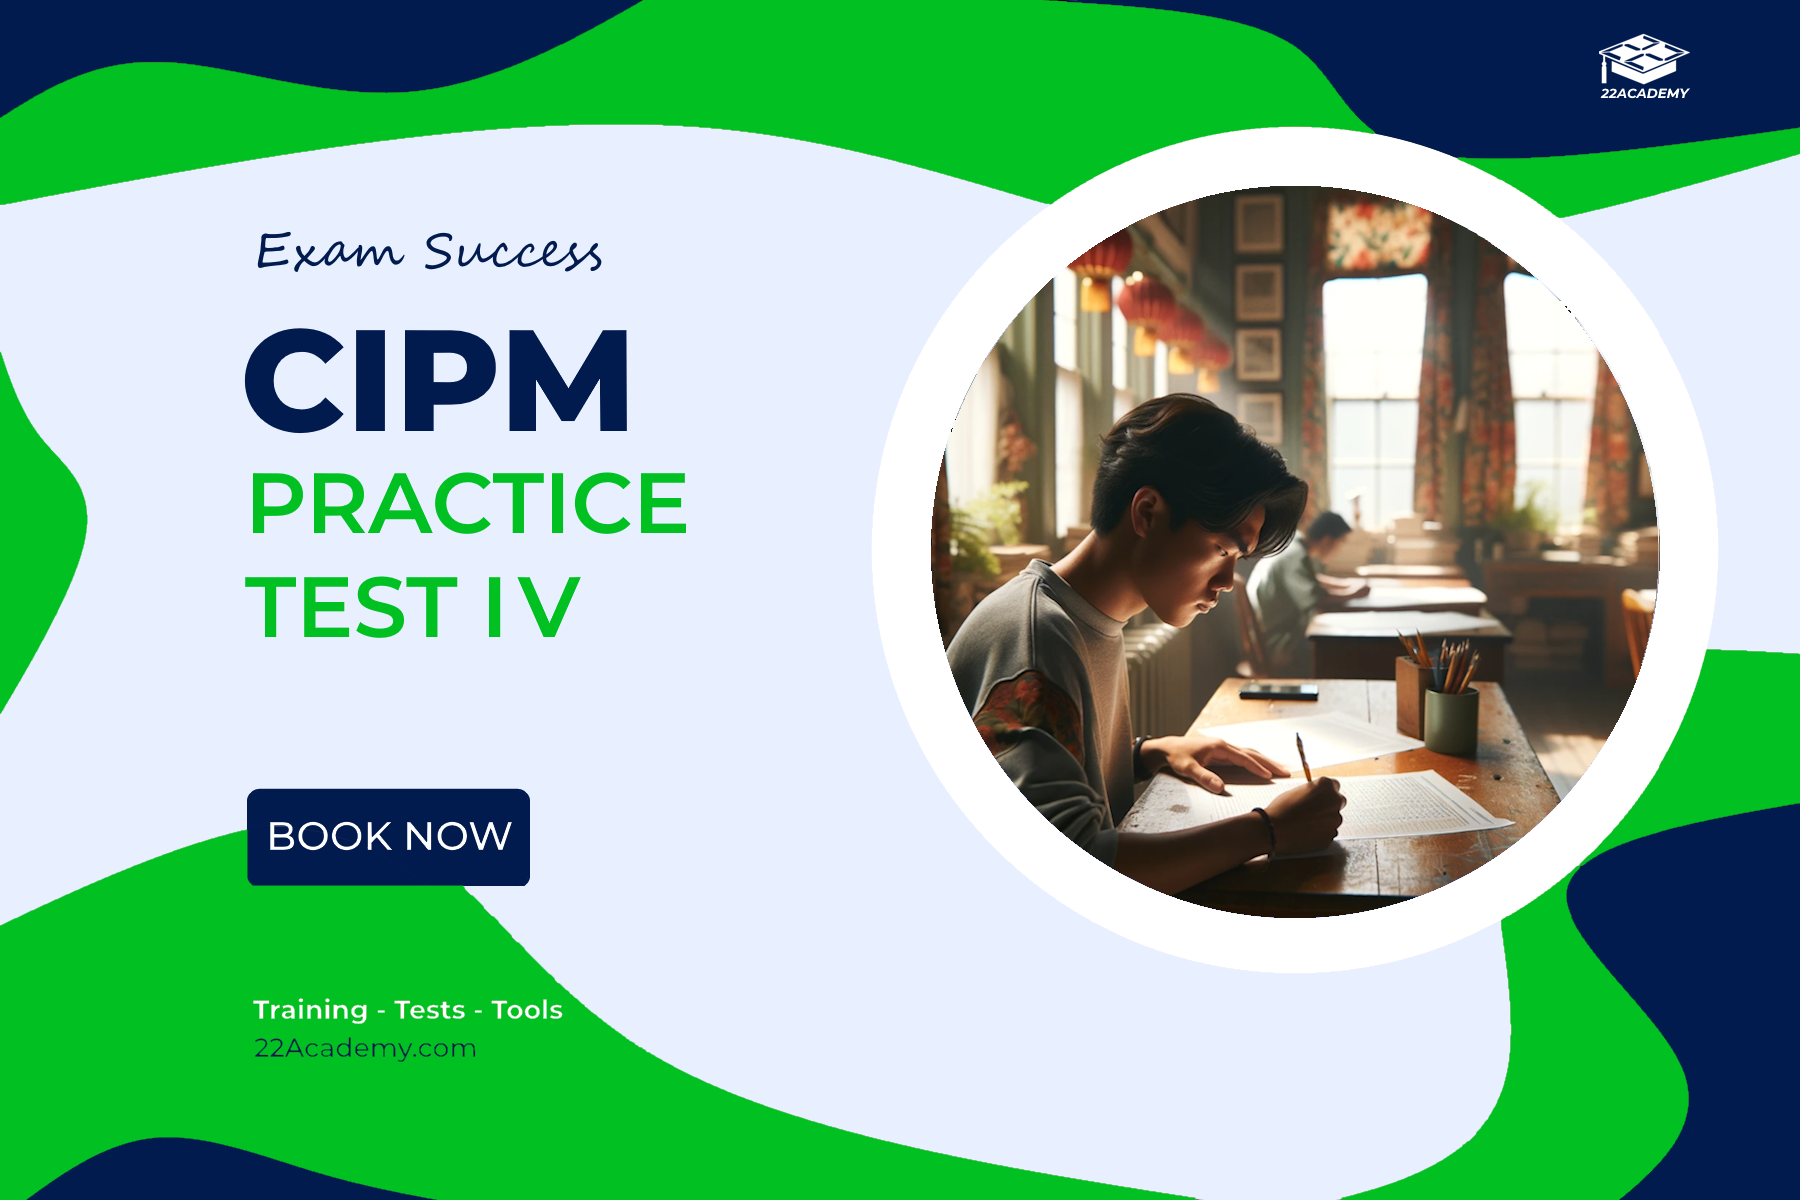 CIPM Practice Test IV